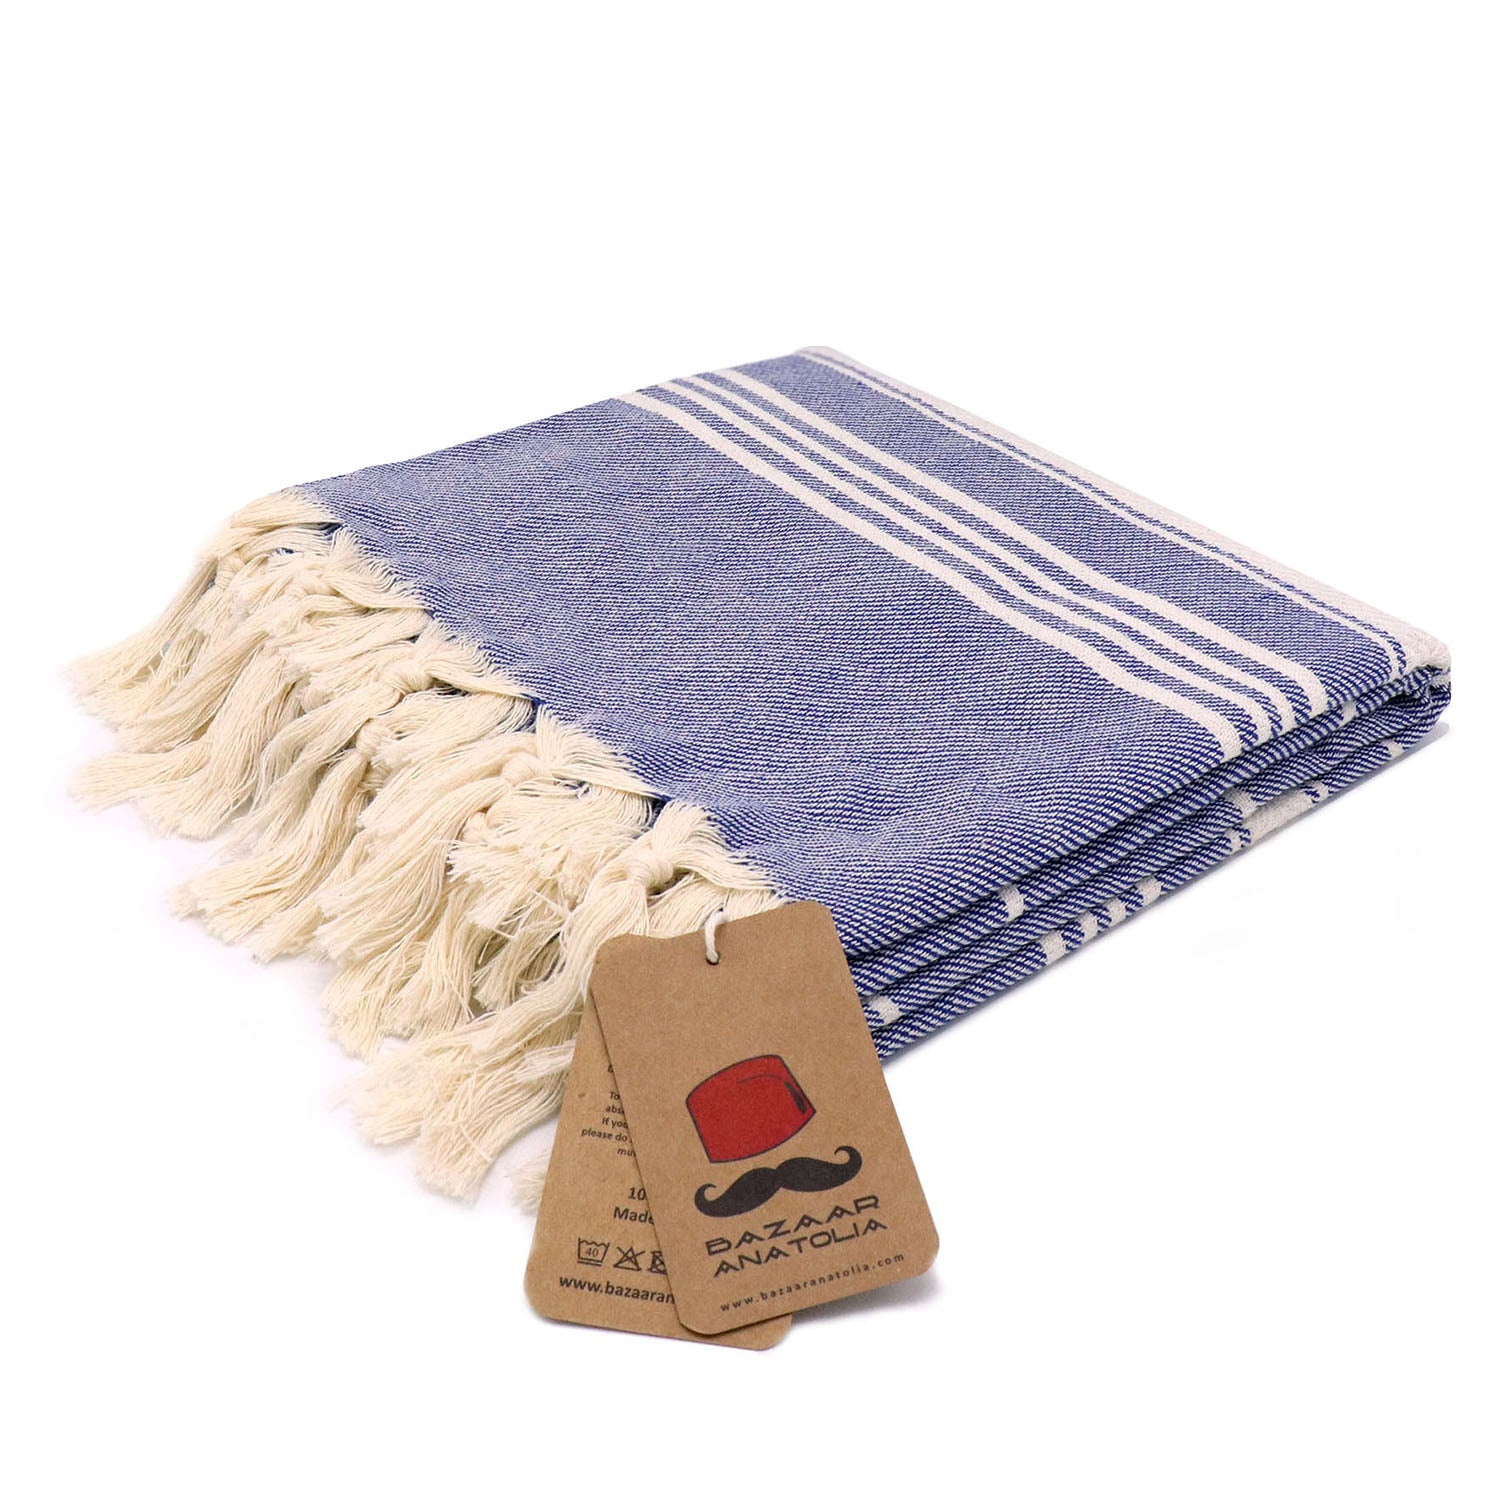 Turkish Bath Towel Peshtemal Thick, Spa Towel, Pool Towels, Beach Towel -  Shop of Turkey - Buy from Turkey with Fast Shipping